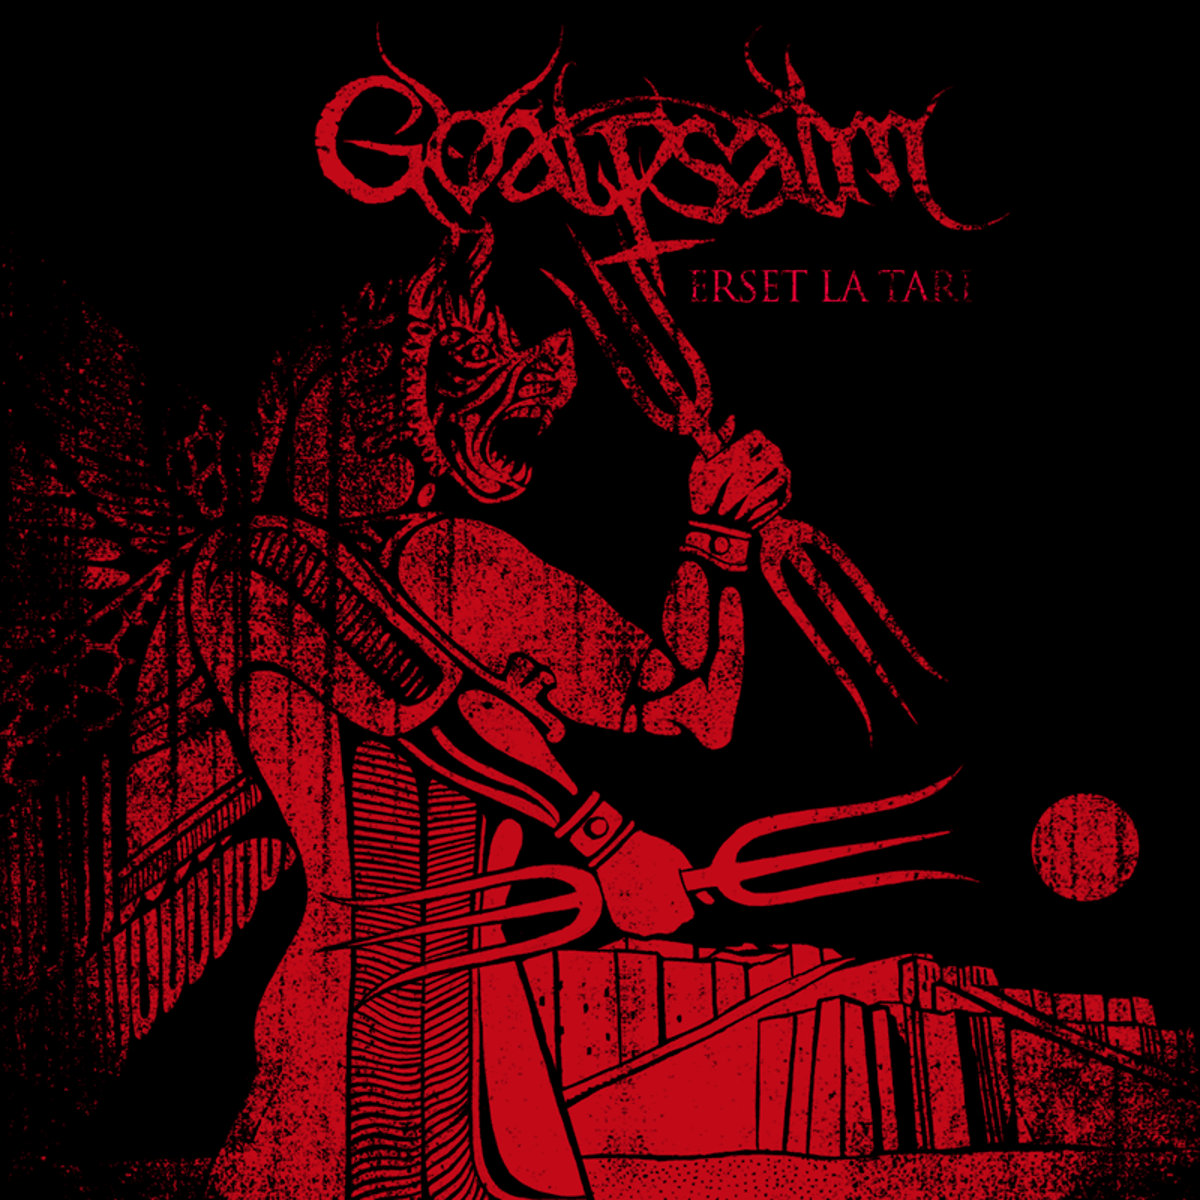 GOATPSALM'Erset La Tari' CD